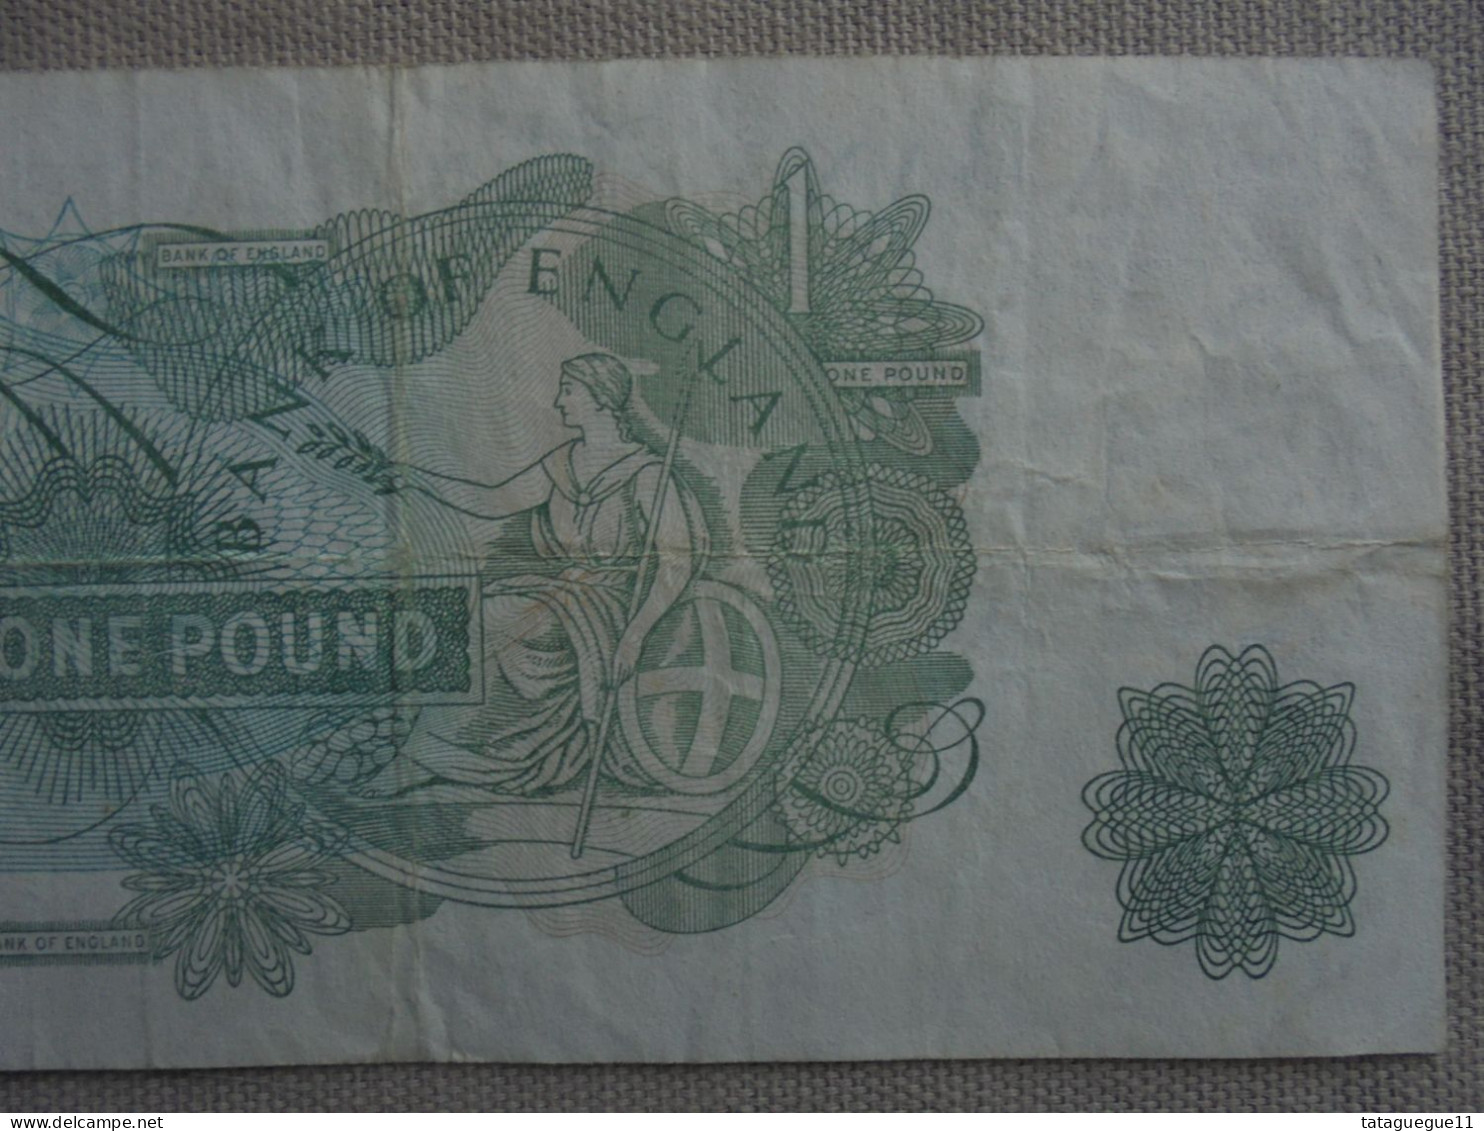 Ancien - Billet de banque - One Pound Bank of England - J.B Page